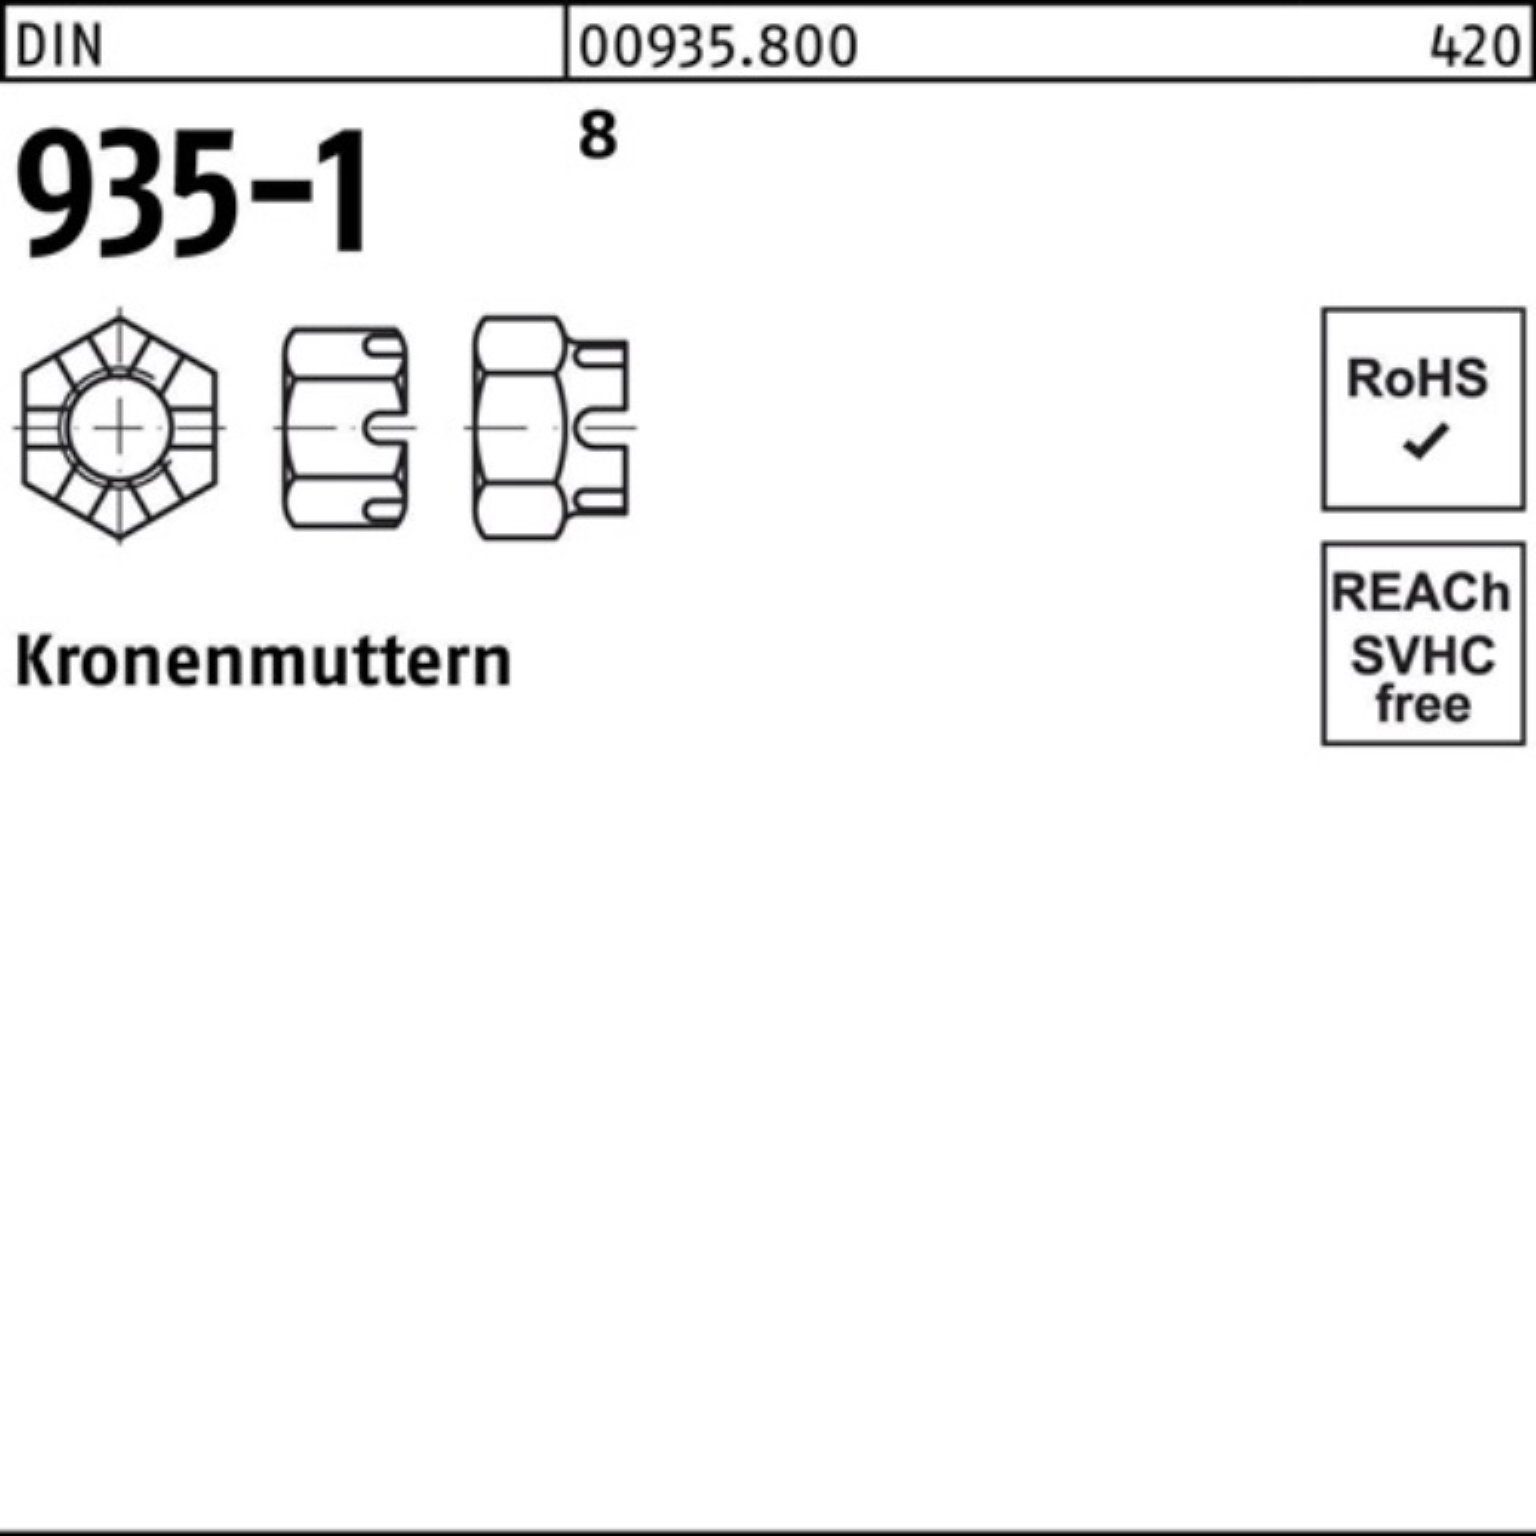 Reyher Kronenmutter 100er Pack Kronenmutter DIN 935-1 M20 8 25 Stück DIN 935-1 8 Kronenmu